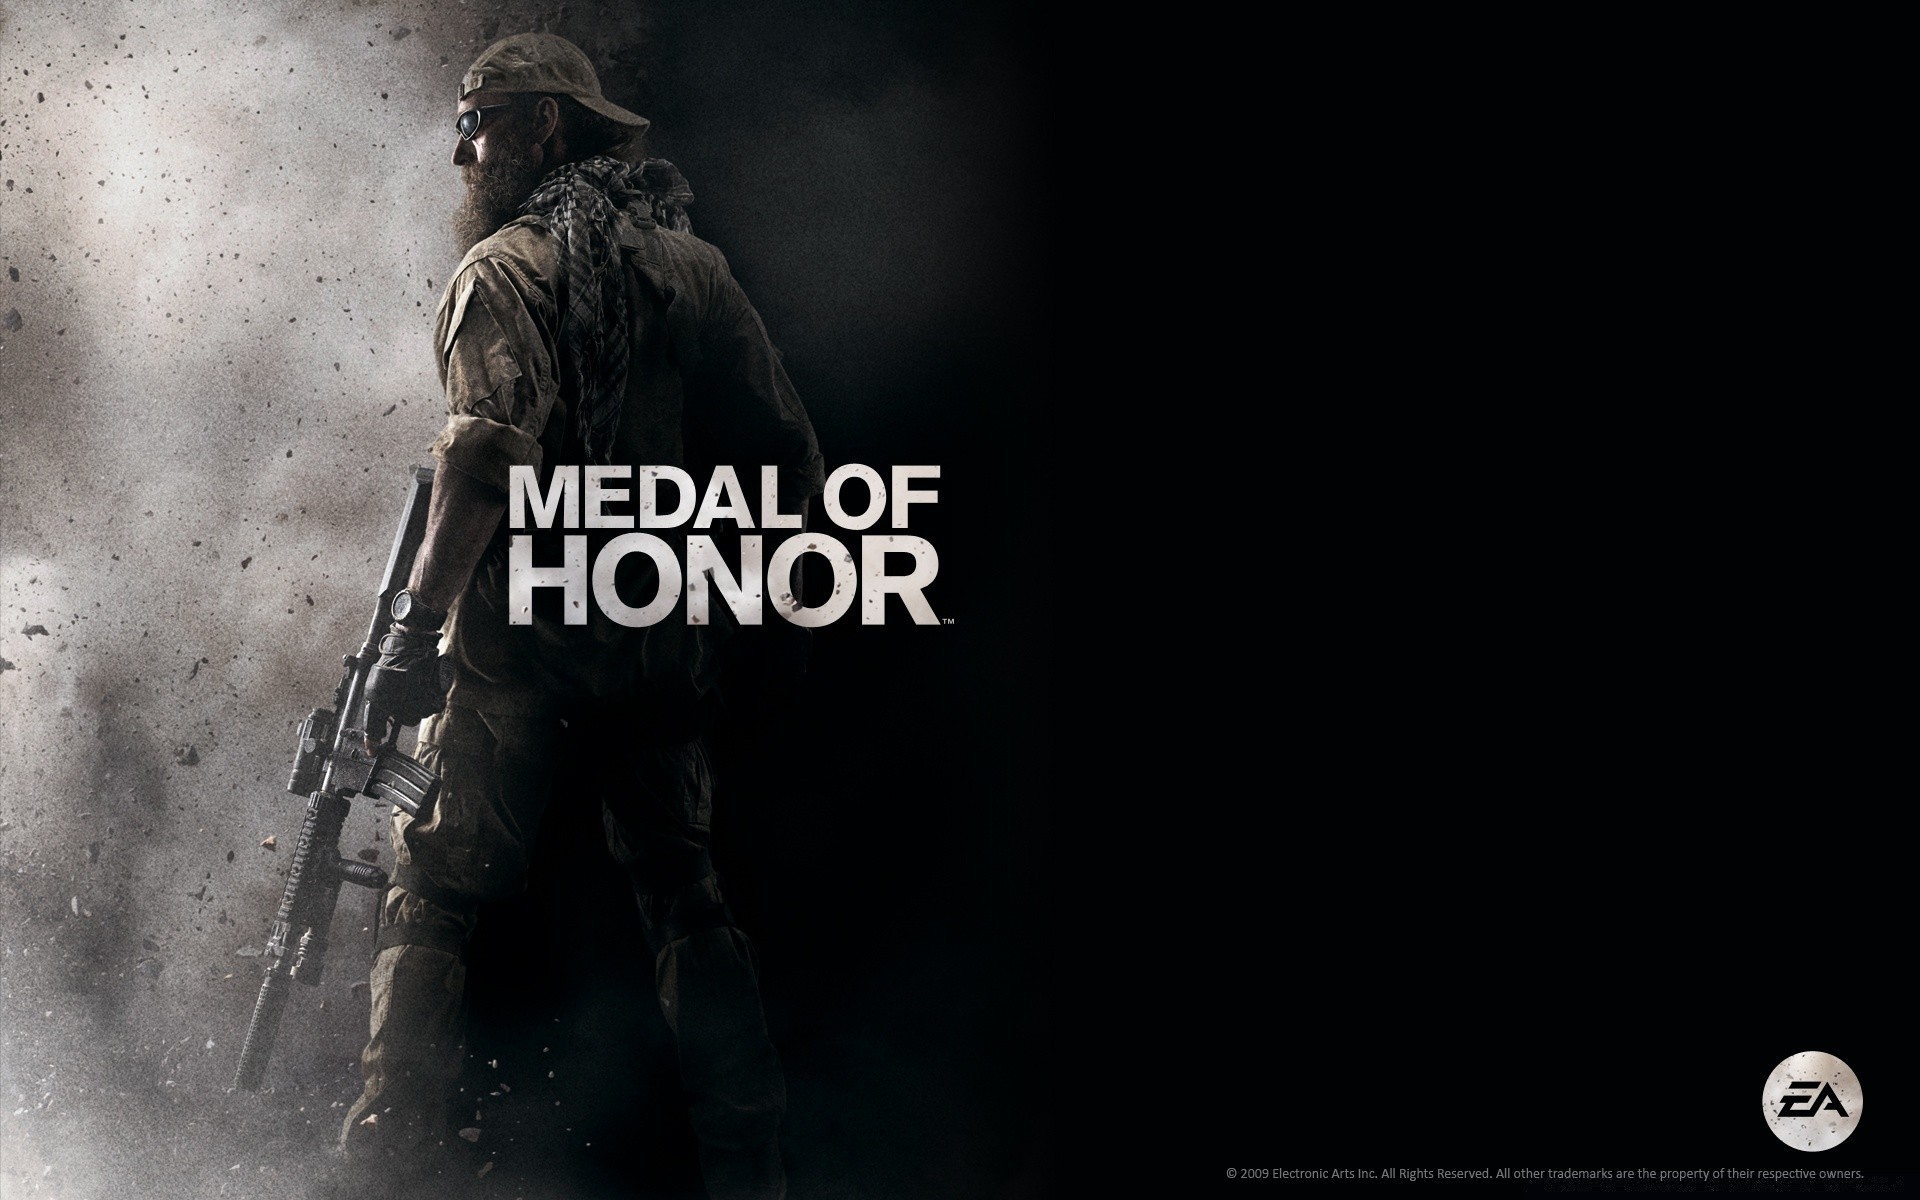 Medal of honor edition. Игра Medal of Honor Warfighter. Медаль оф хонор 2010 обои. Медаль за отвагу игра 2010. Игры Medal of Honor 2010 Limited.